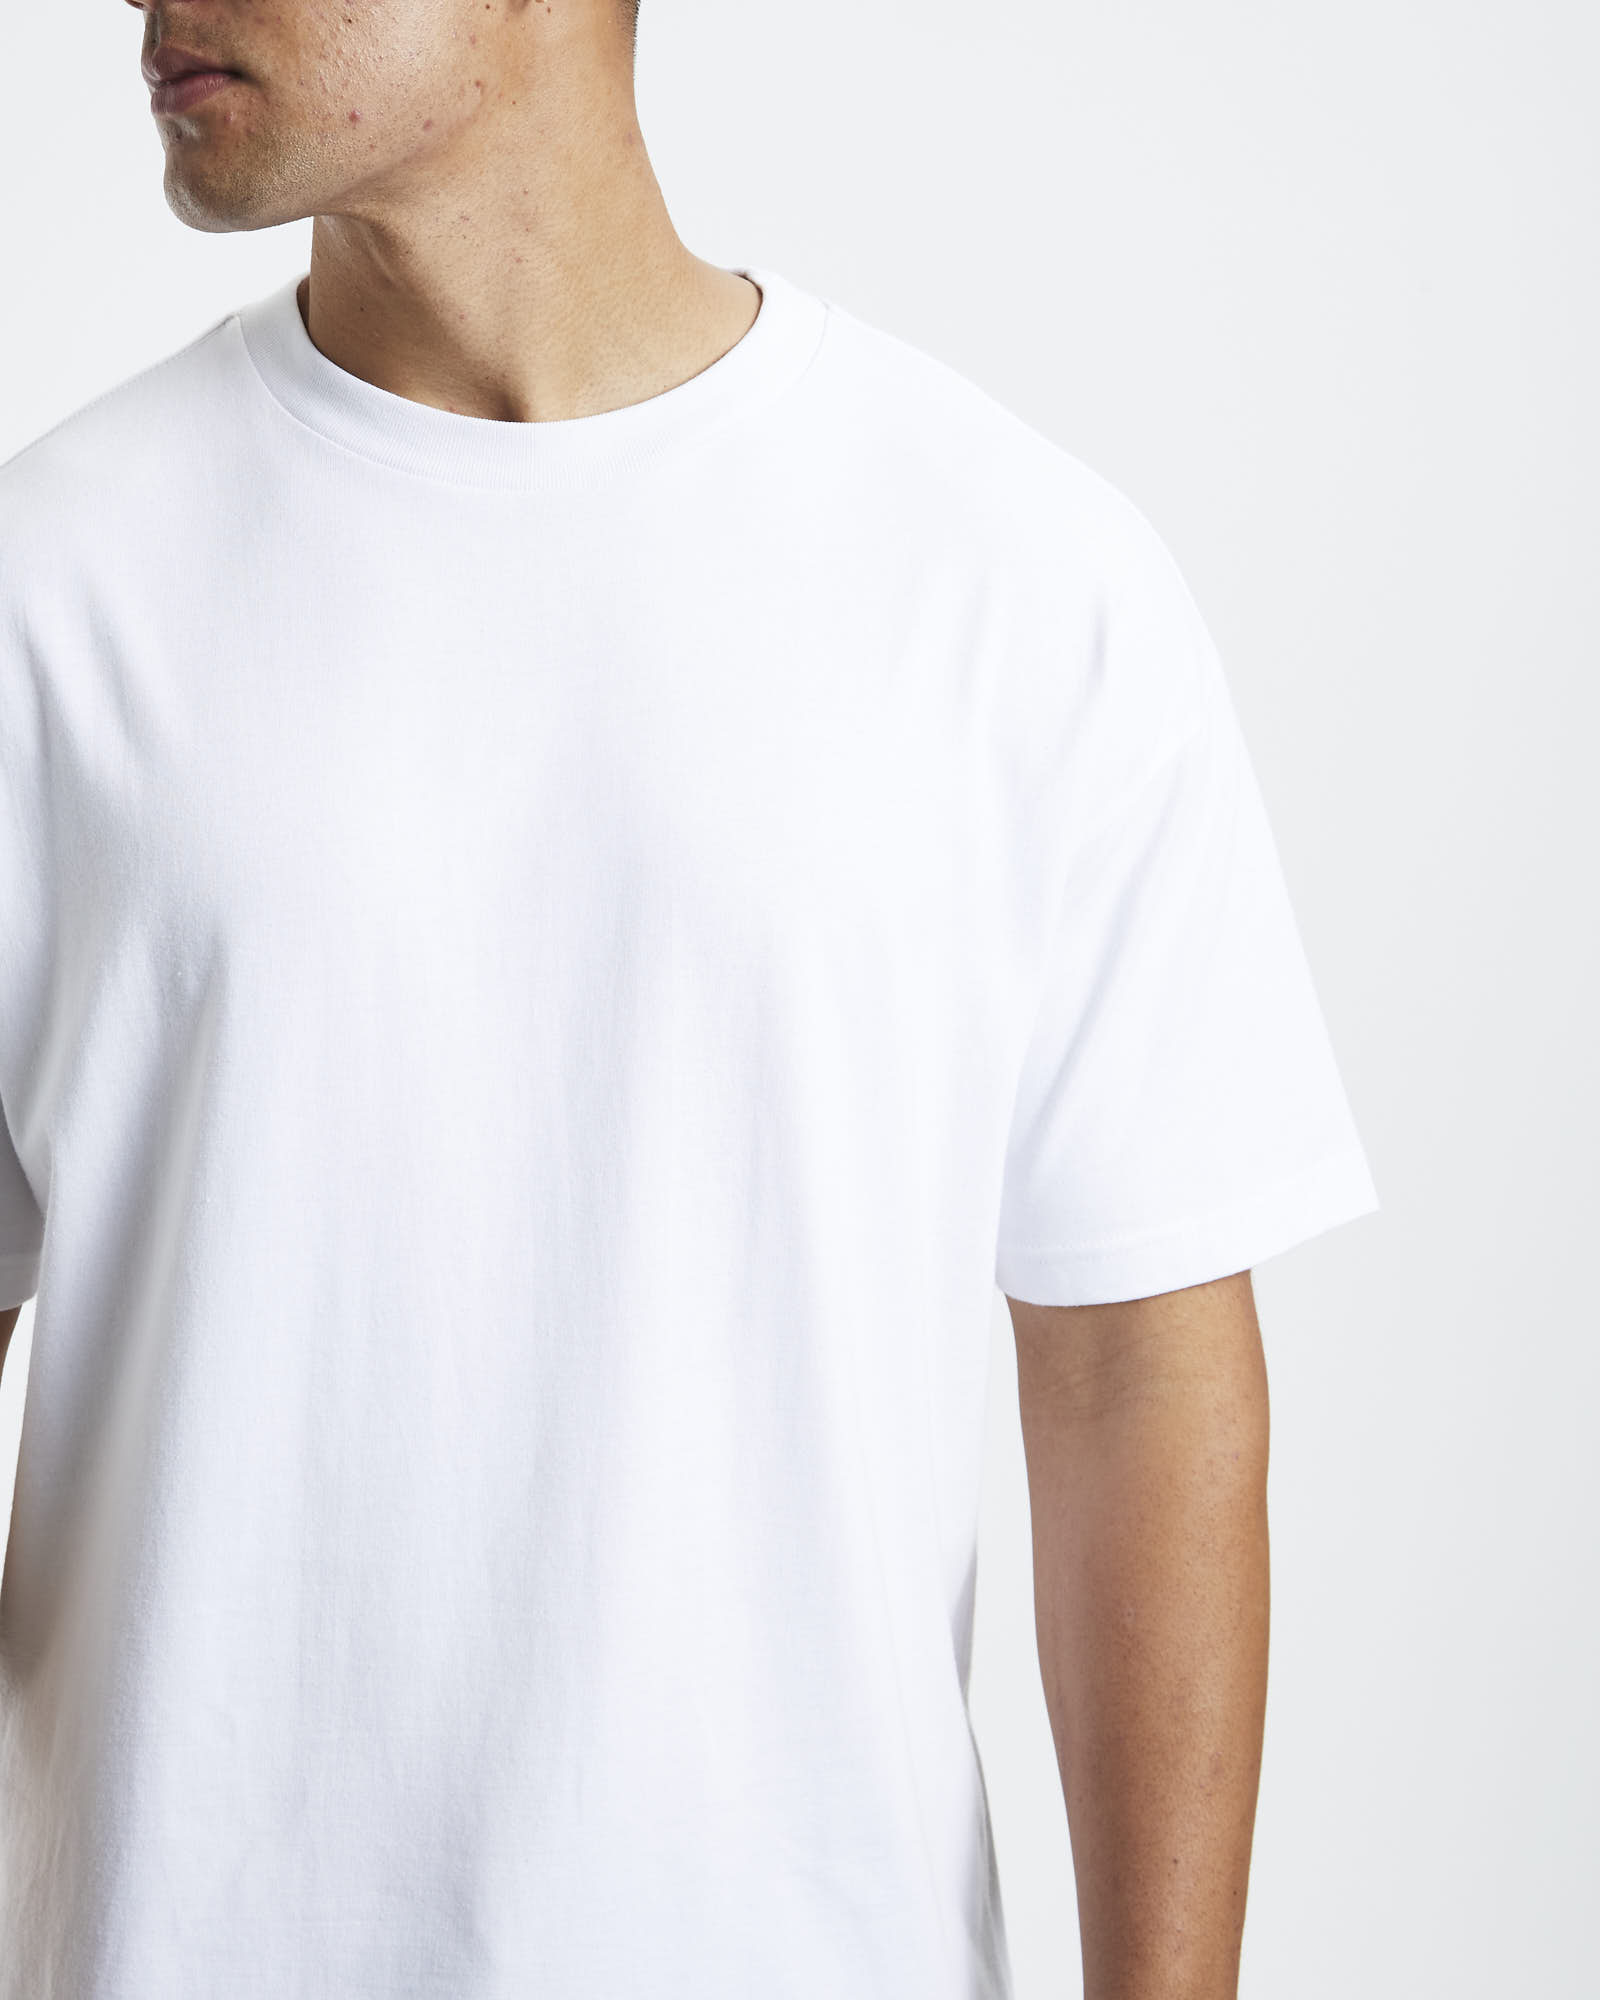 General Pants Co. Basics O.G Skate T-Shirt - White | SurfStitch